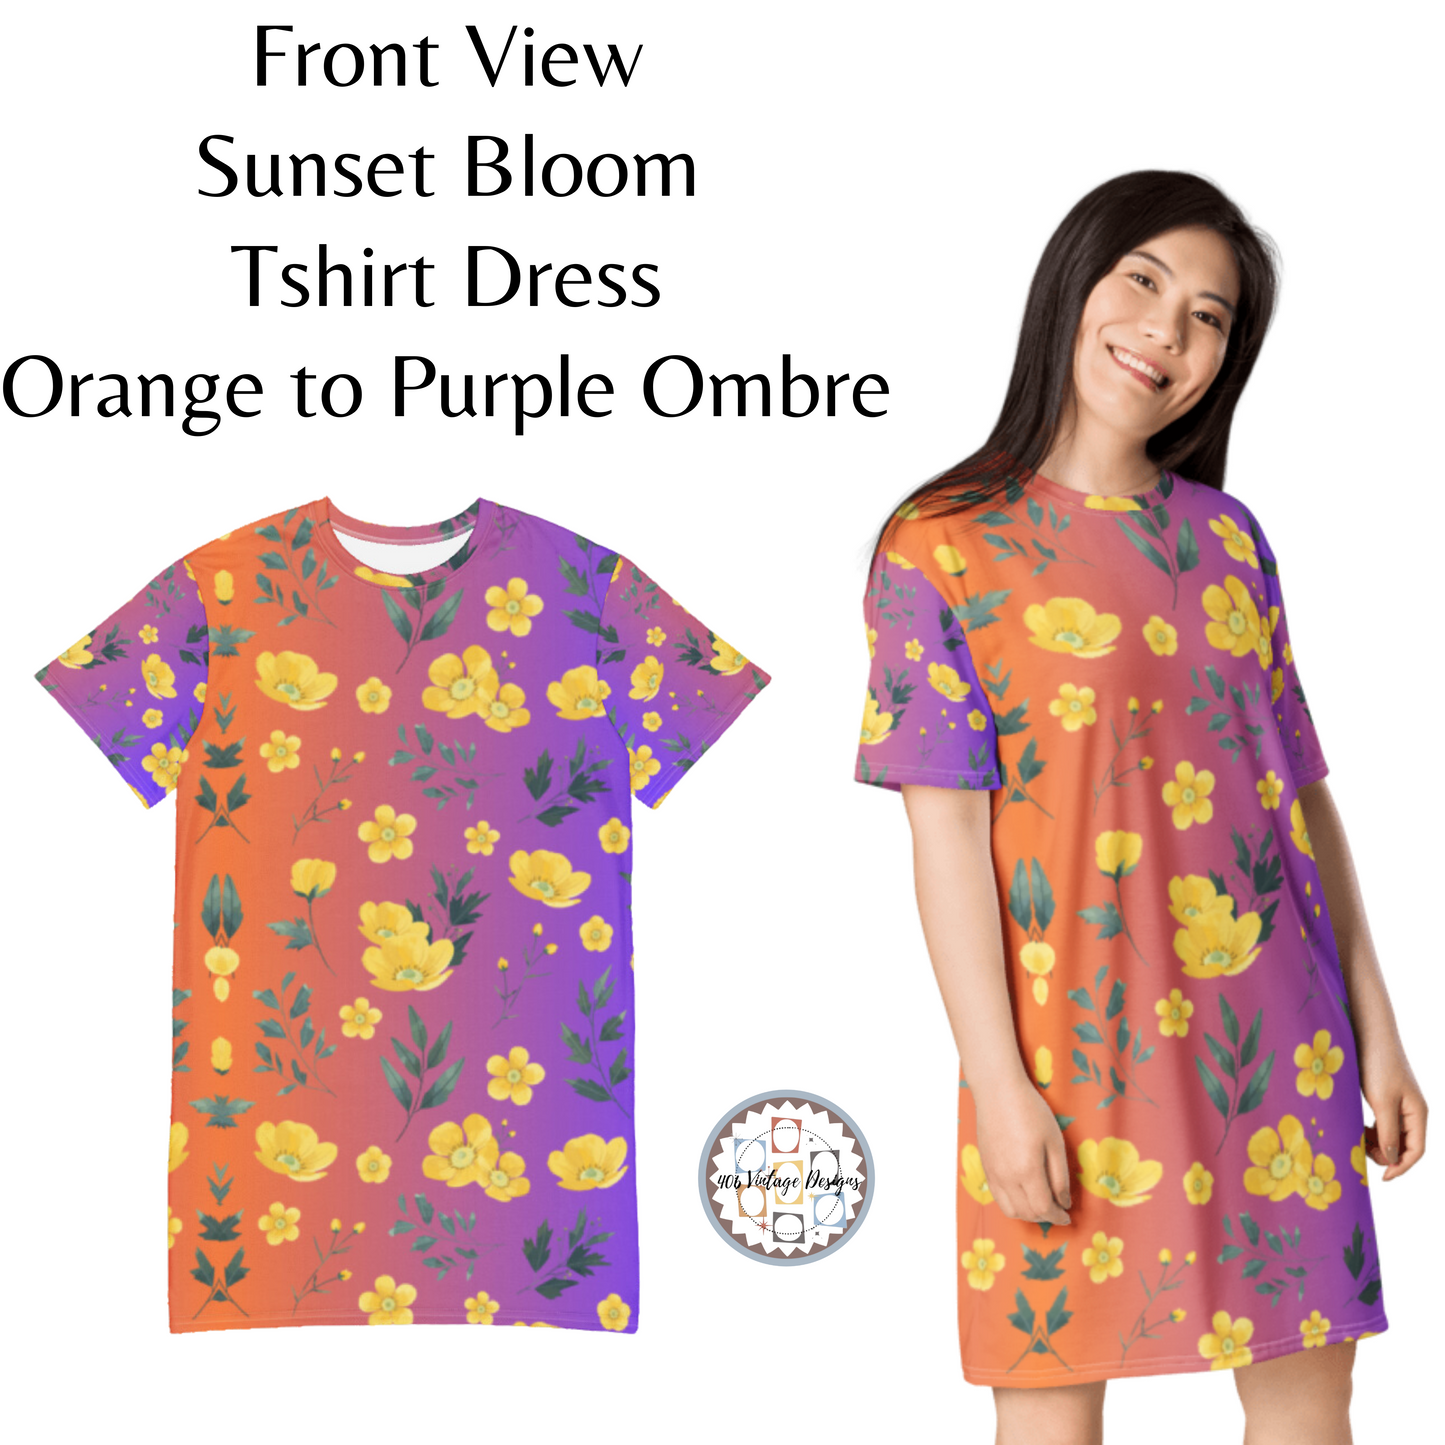 Sunset Bloom Orange To Purple Ombre Yellow Buttercup Flower T-Shirt Dress